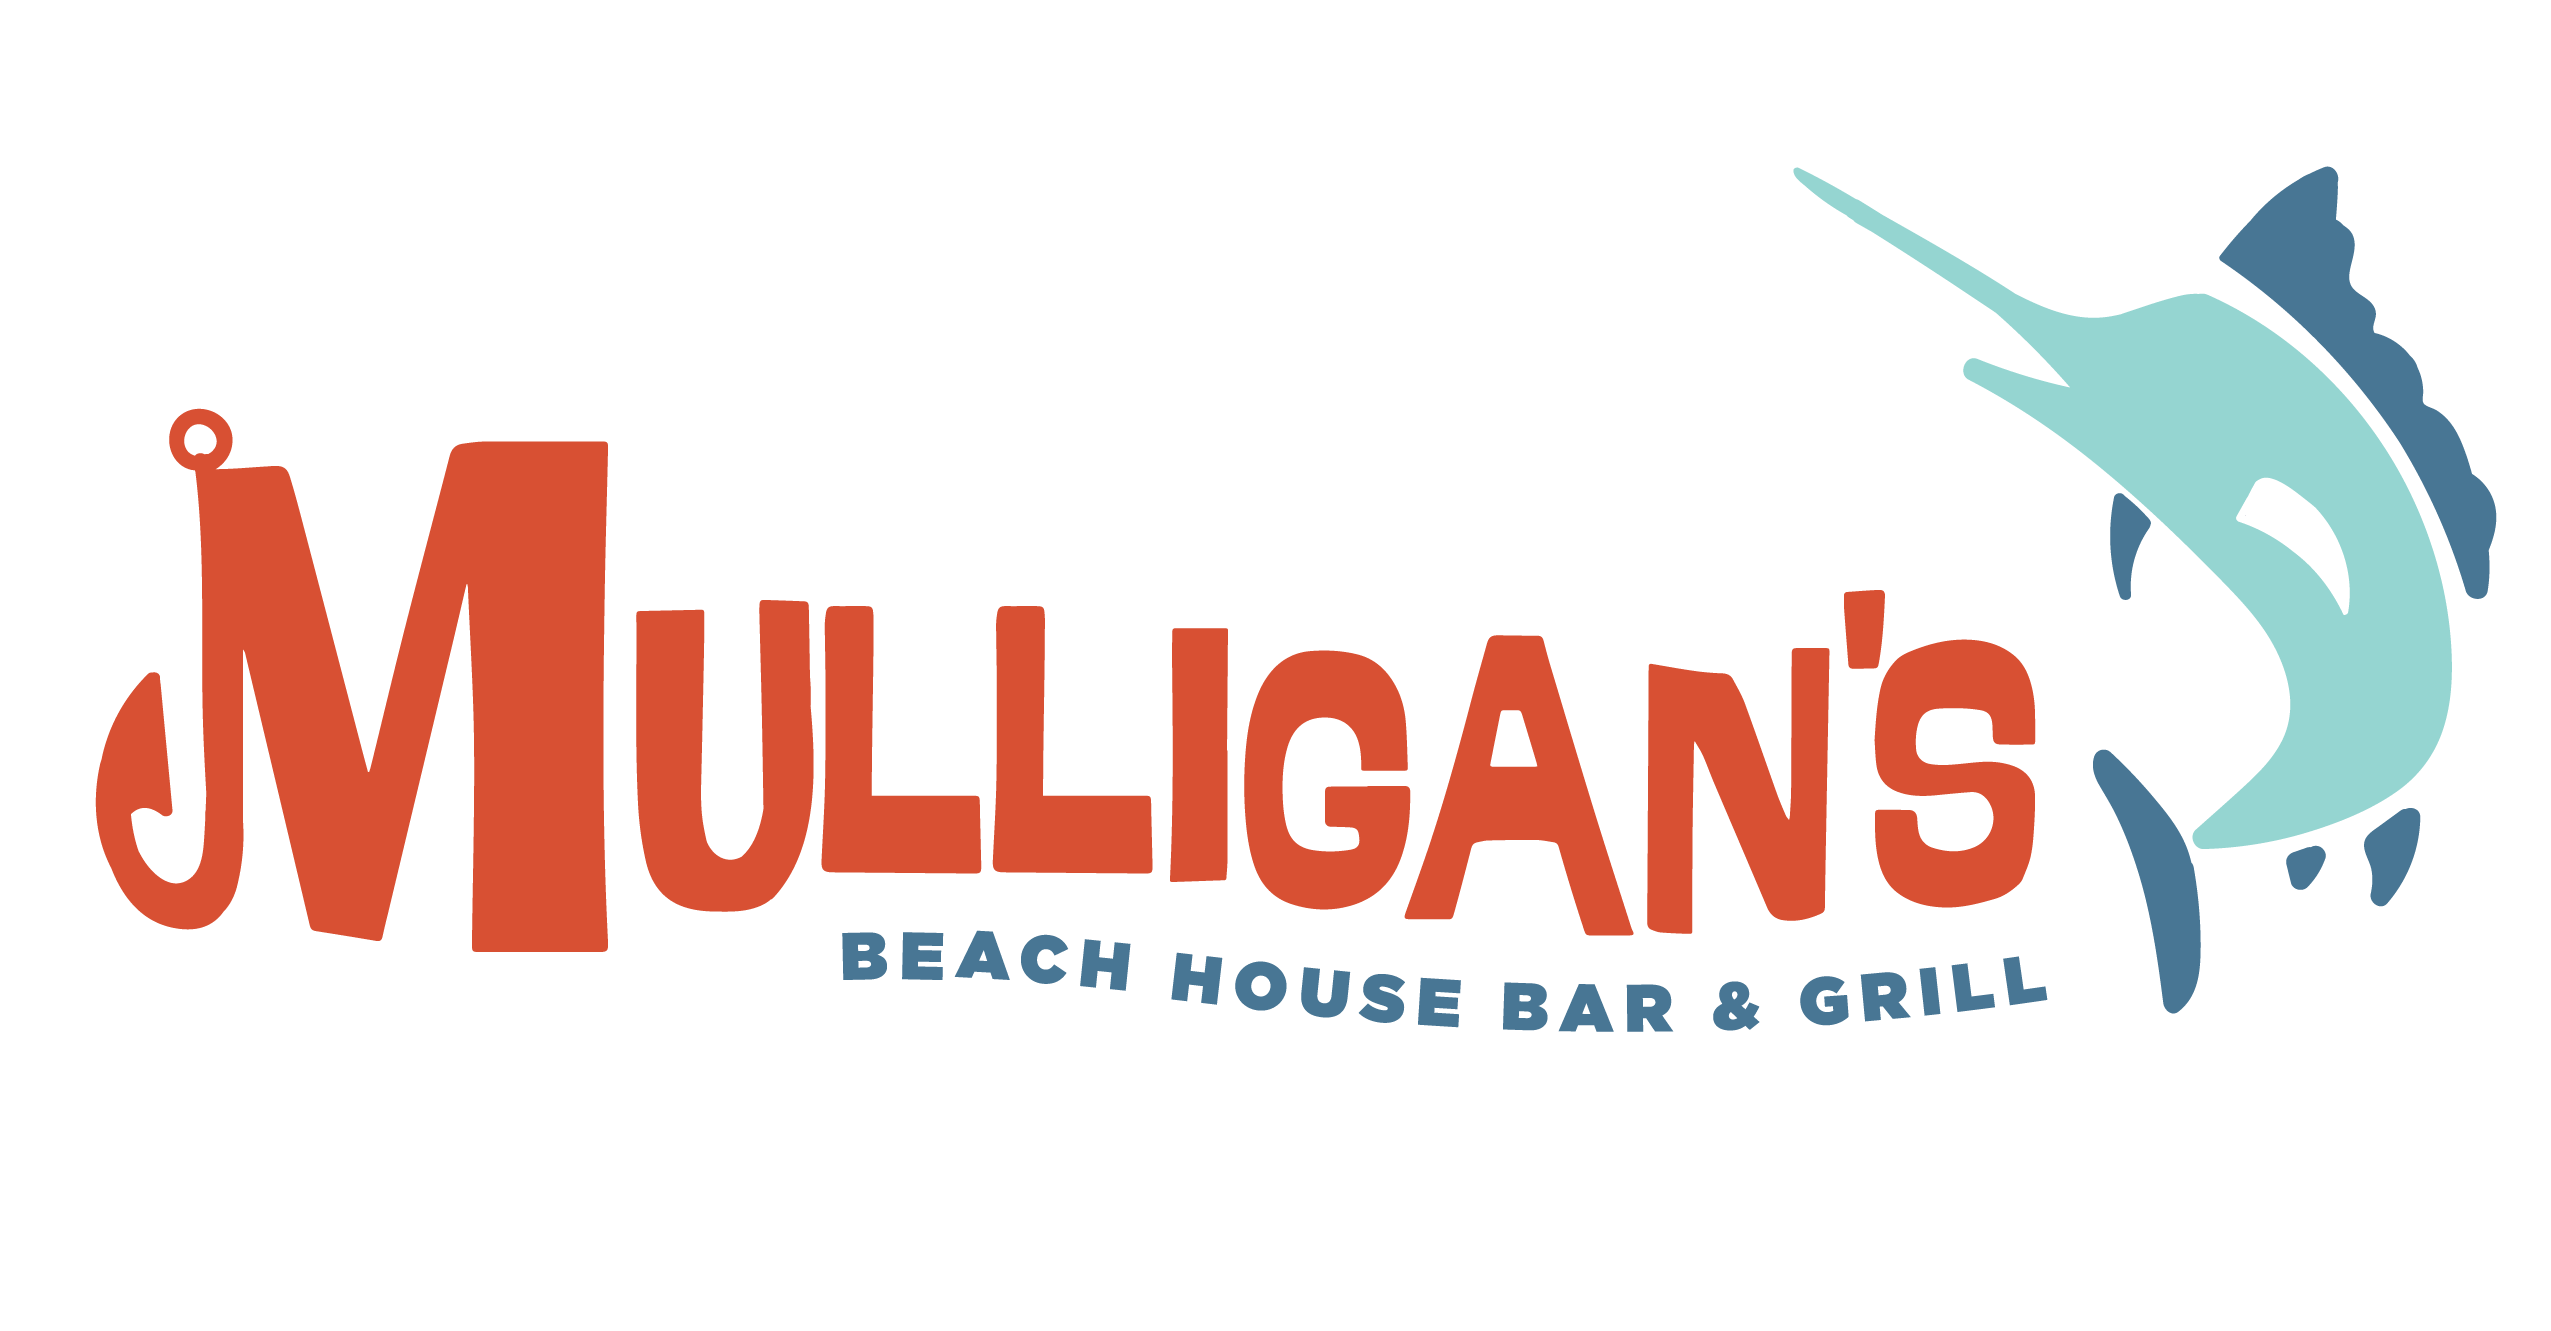 Mulligan’s Beach House Bar & Grill